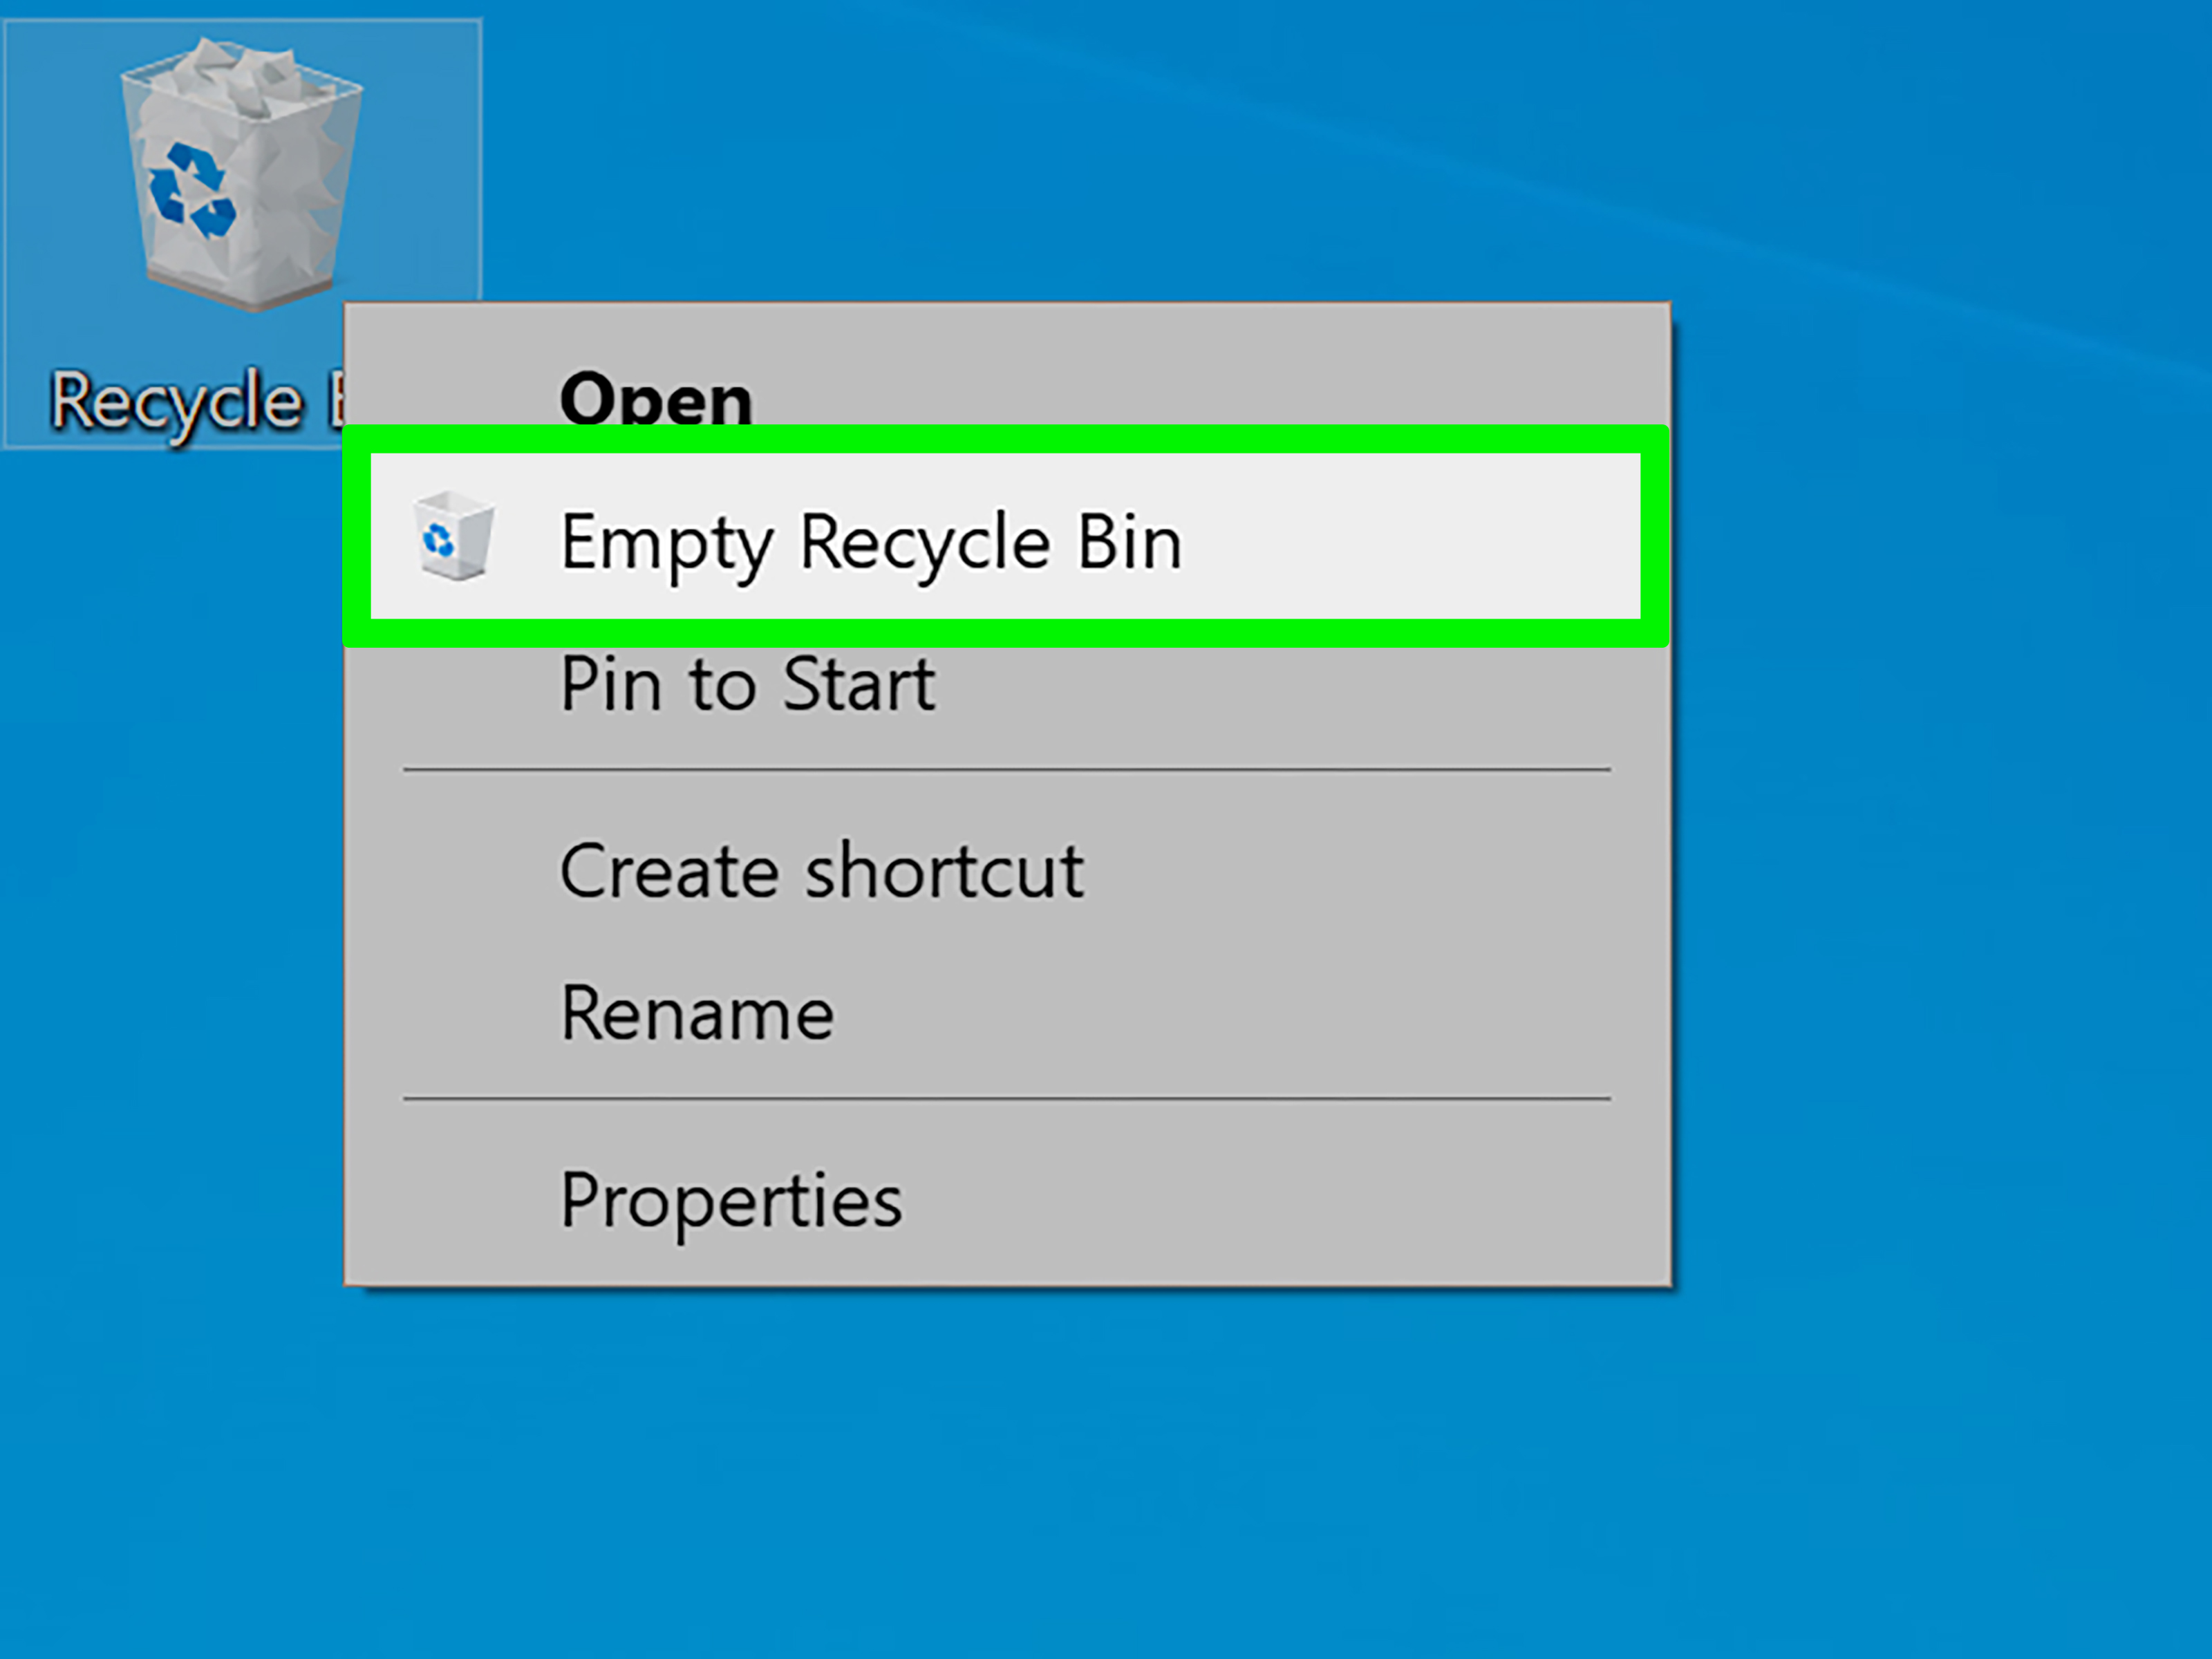 1. Delete unnecessary files
- Open File Explorer by pressing the Windows key + E